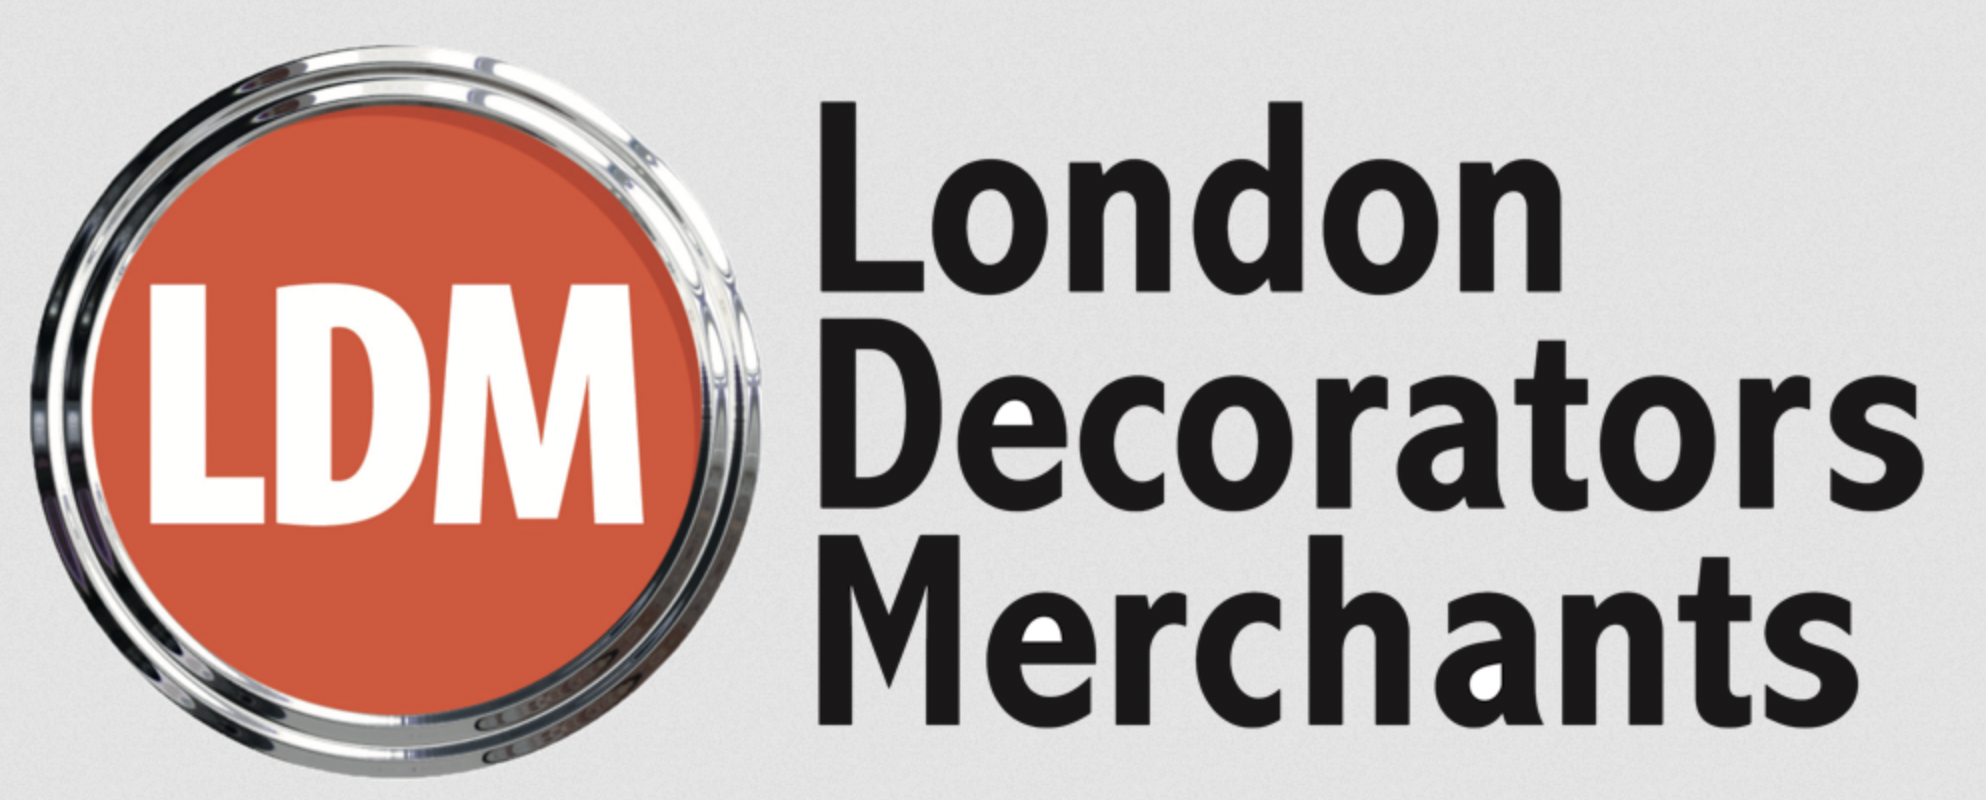 LONDON DECORATORS MERCHANTS logo